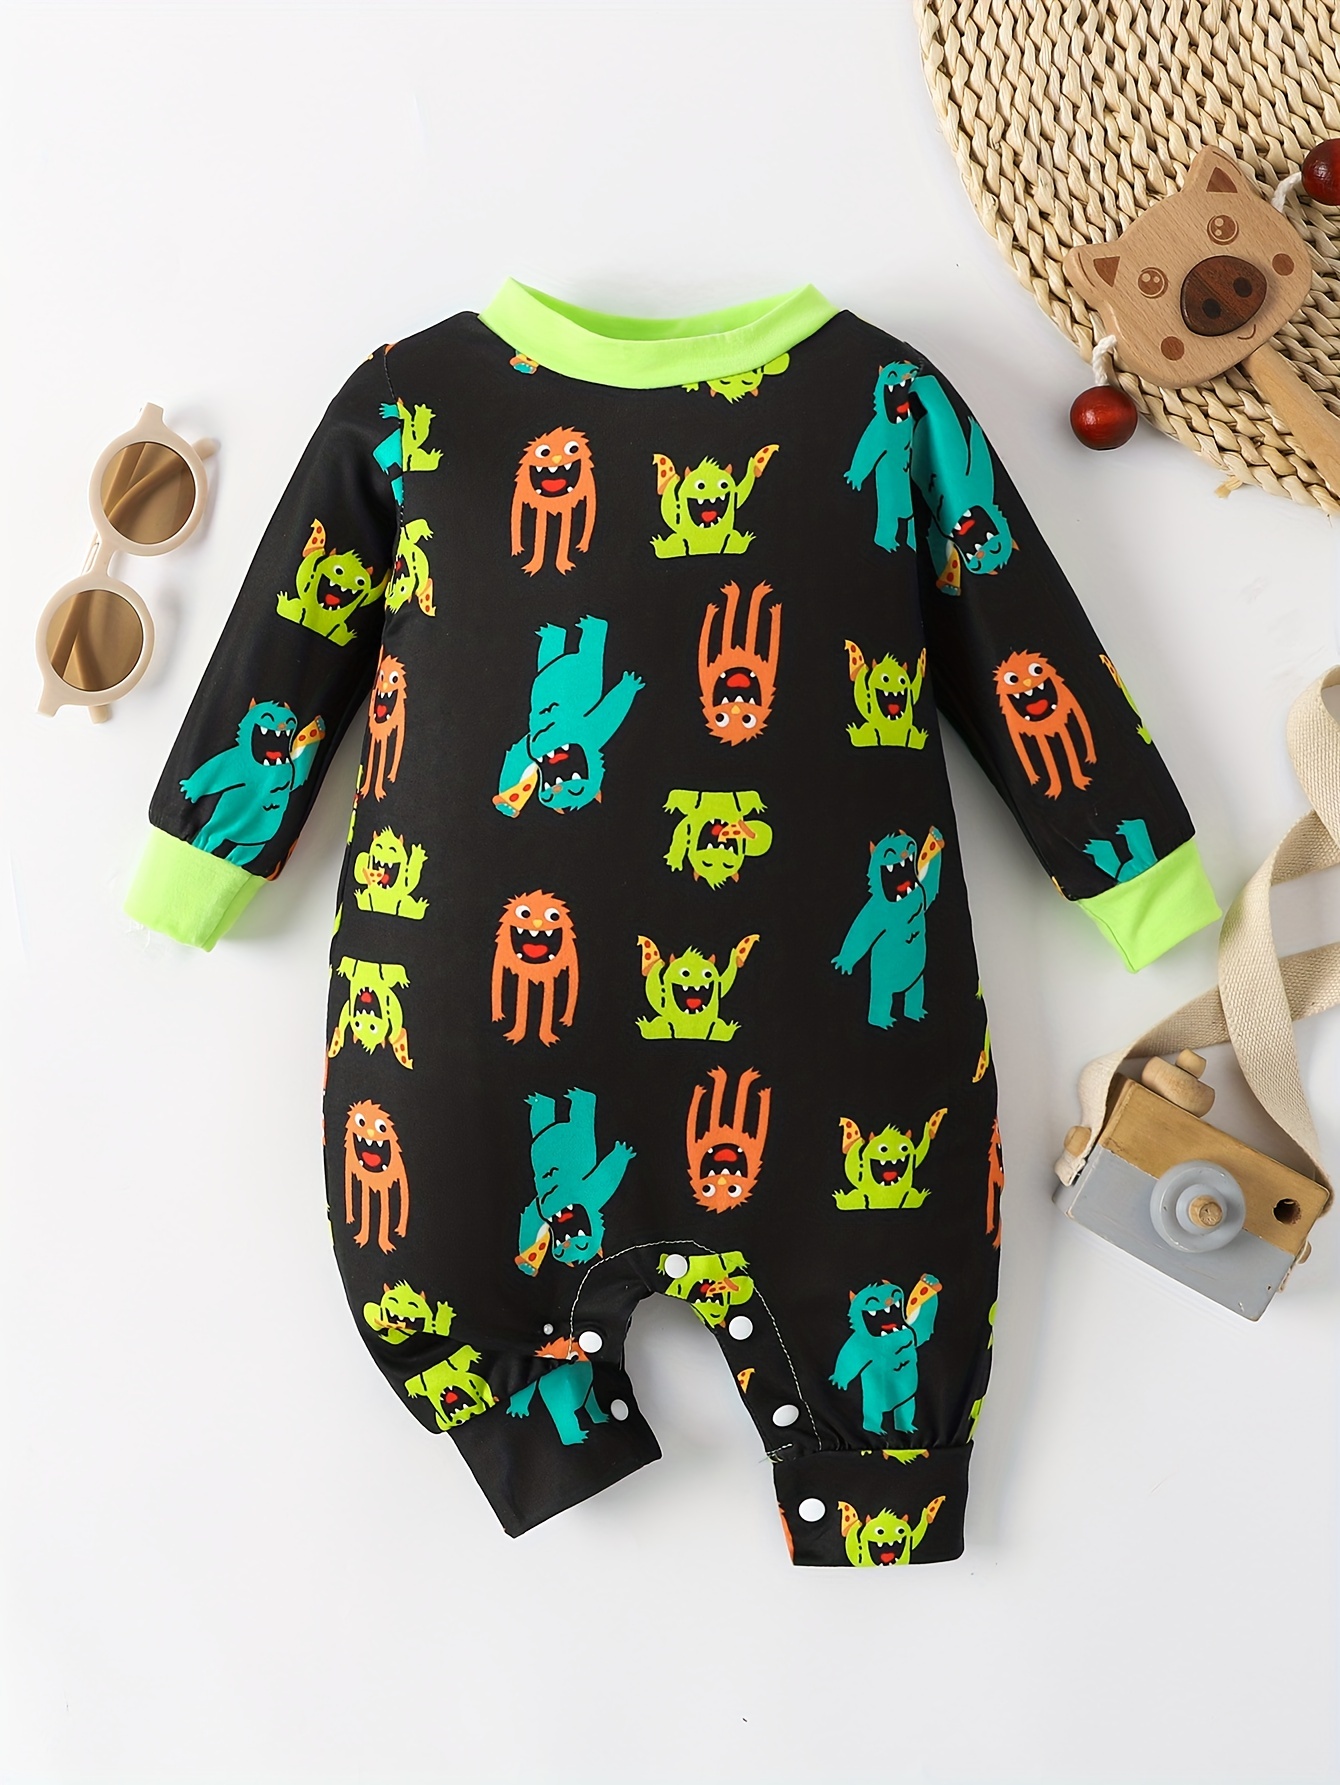 Multitrust Newborn Baby Boys Jumpsuit Checkerboard Plaid Print Short Sleeve Romper Bodysuit Playsuit Outfit Summer Clothes, Infant Unisex, Size: 18-24